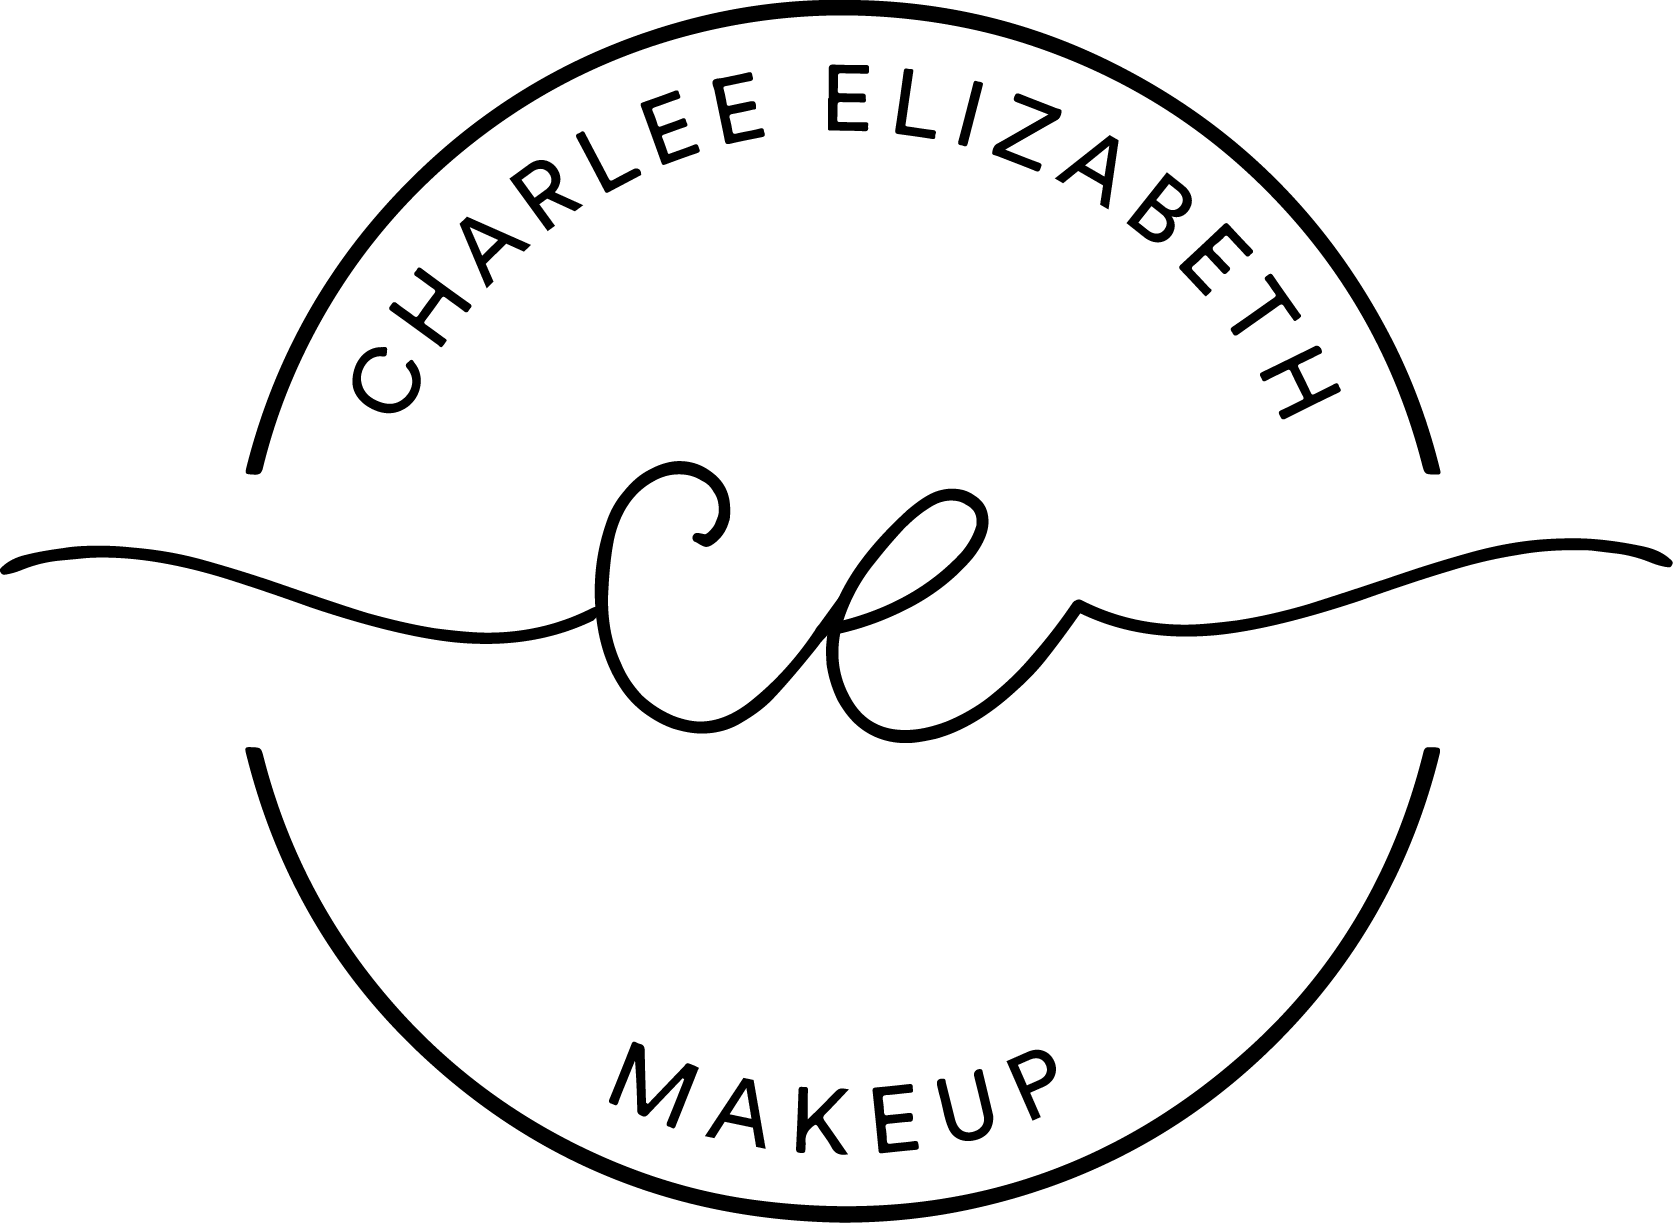 Charlee Elizabeth Makeup